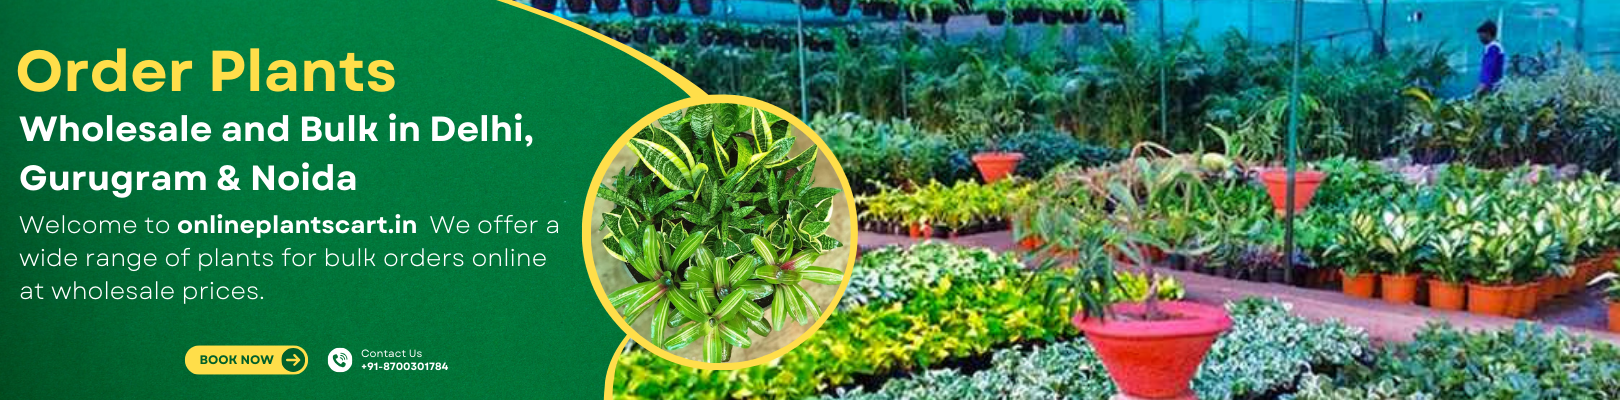 Orders Bulk Plants Online in Delhi NCR | Wholesale Plants Dealer